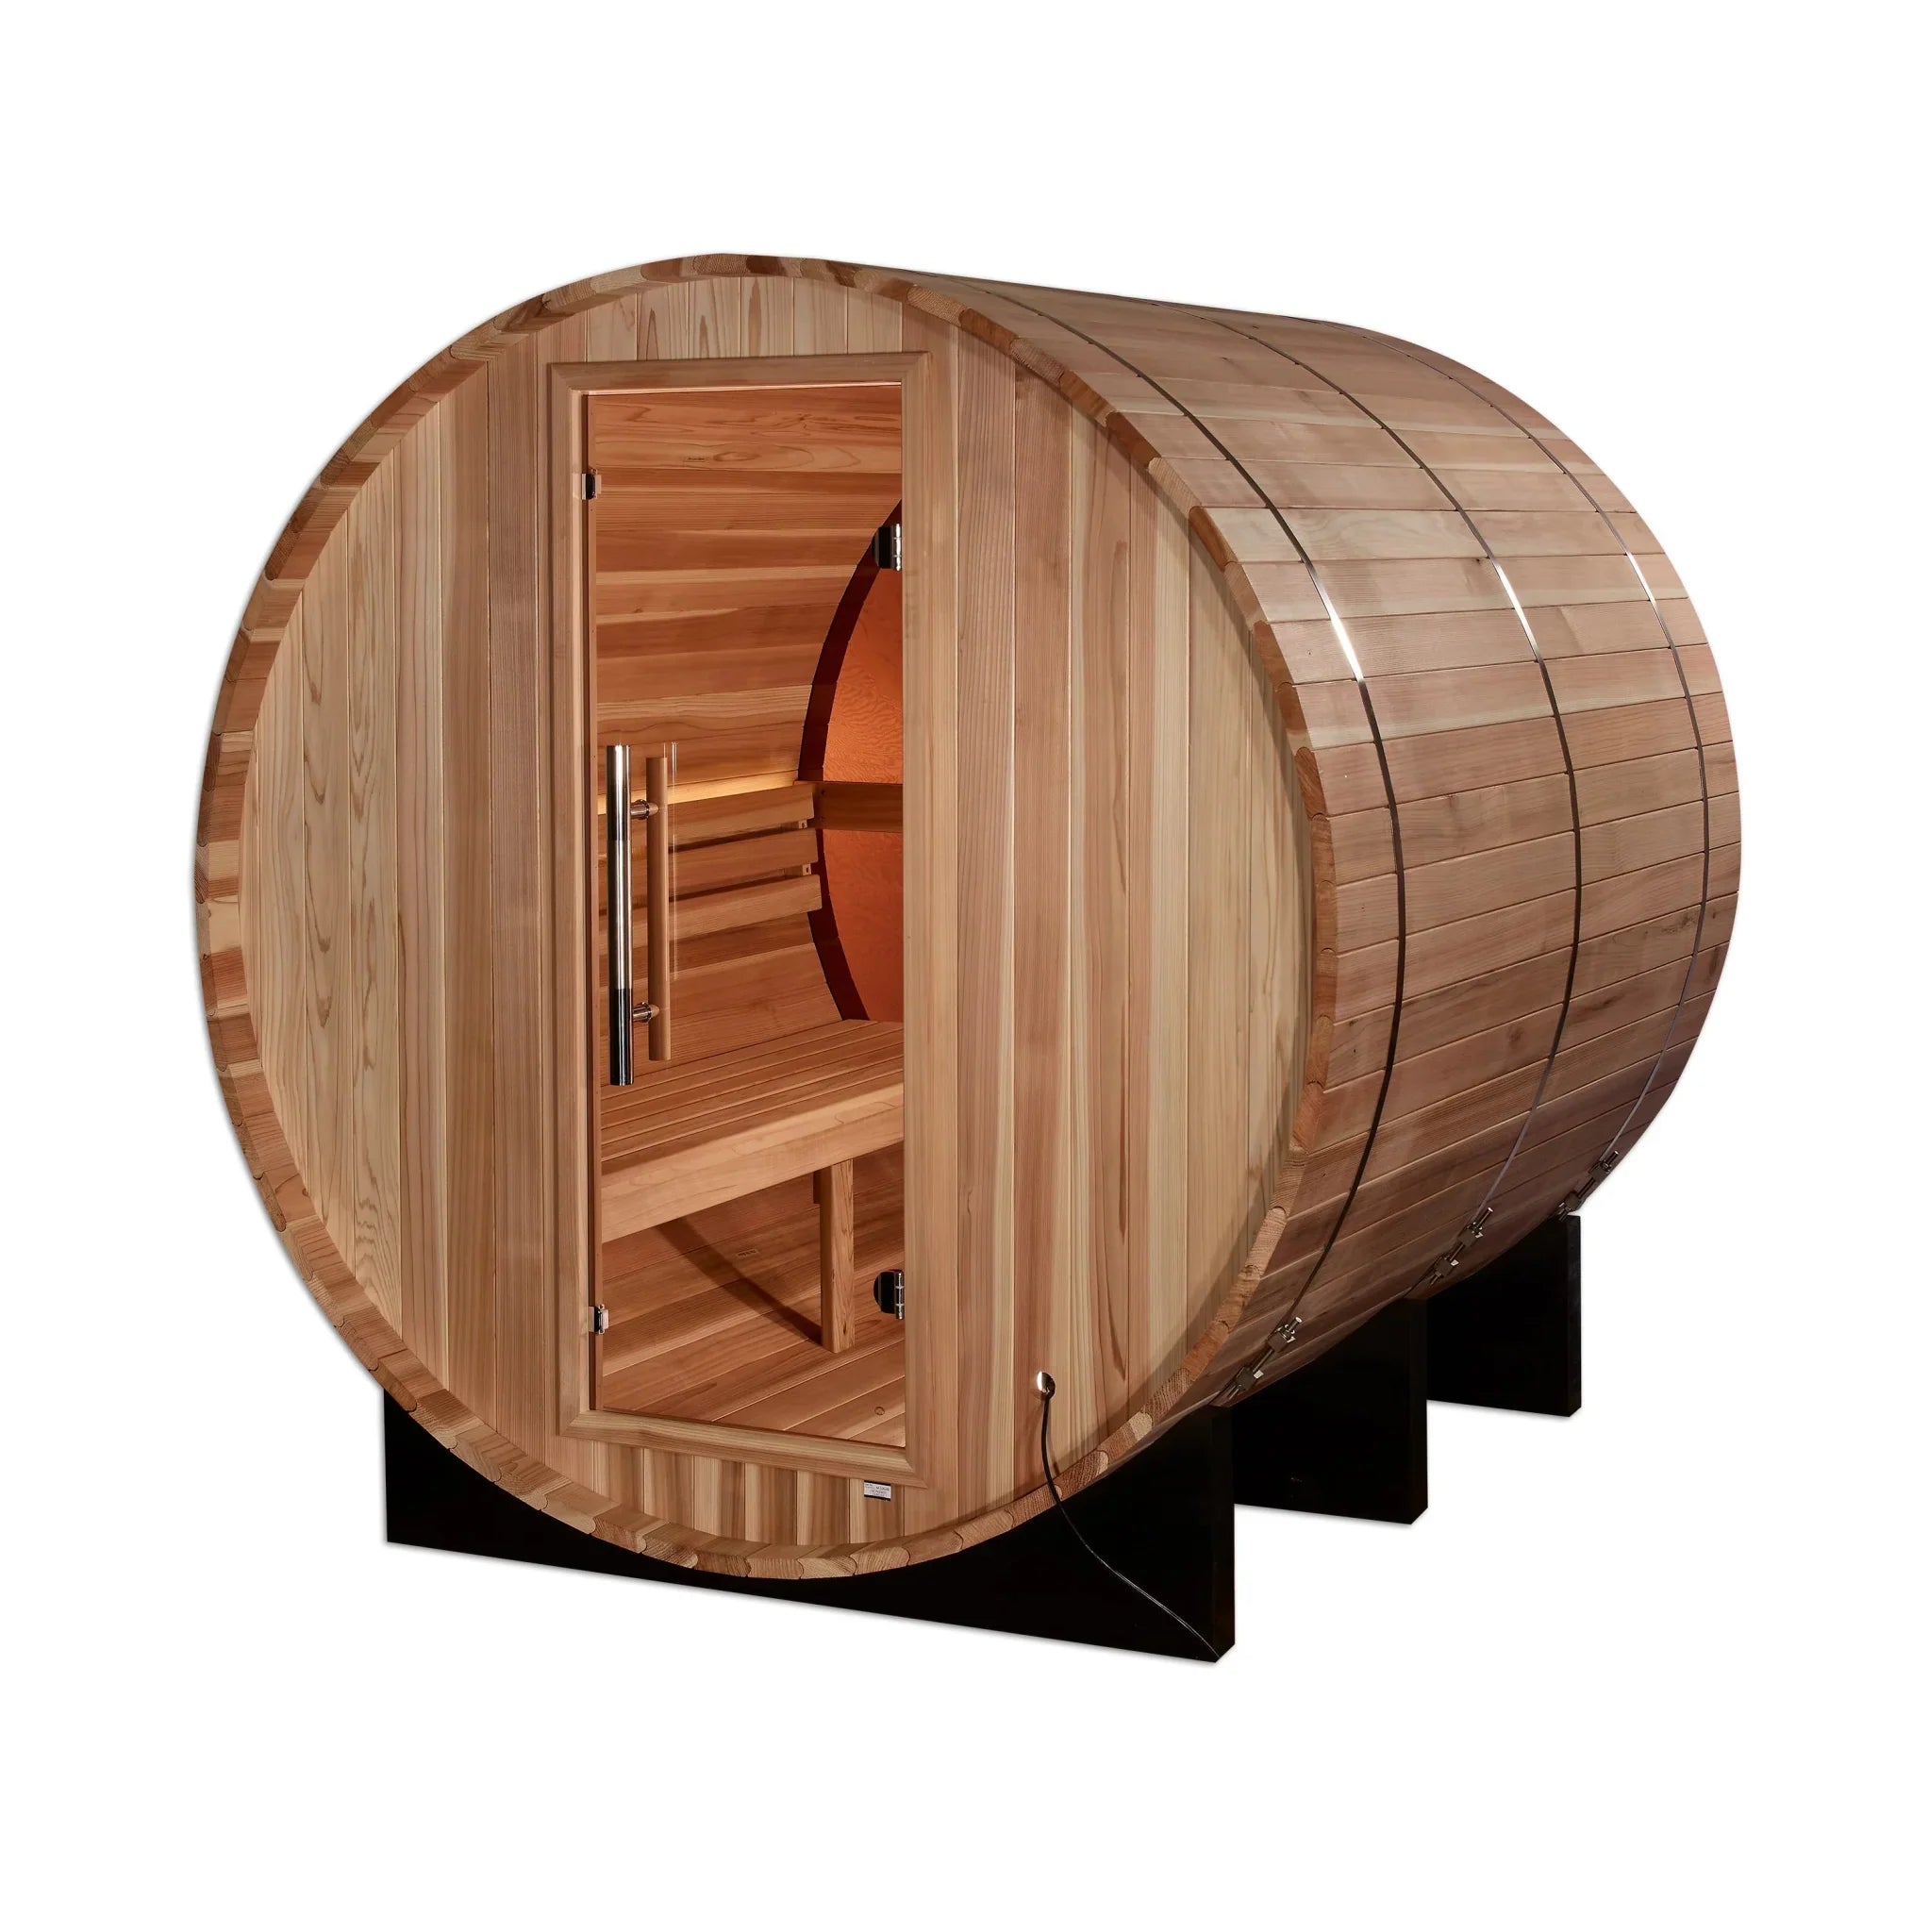 Golden Designs "Zurich" 4 Person Barrel with Bronze Privacy View - Traditional Sauna - Pacific Cedar - Lotus Massage Chairs